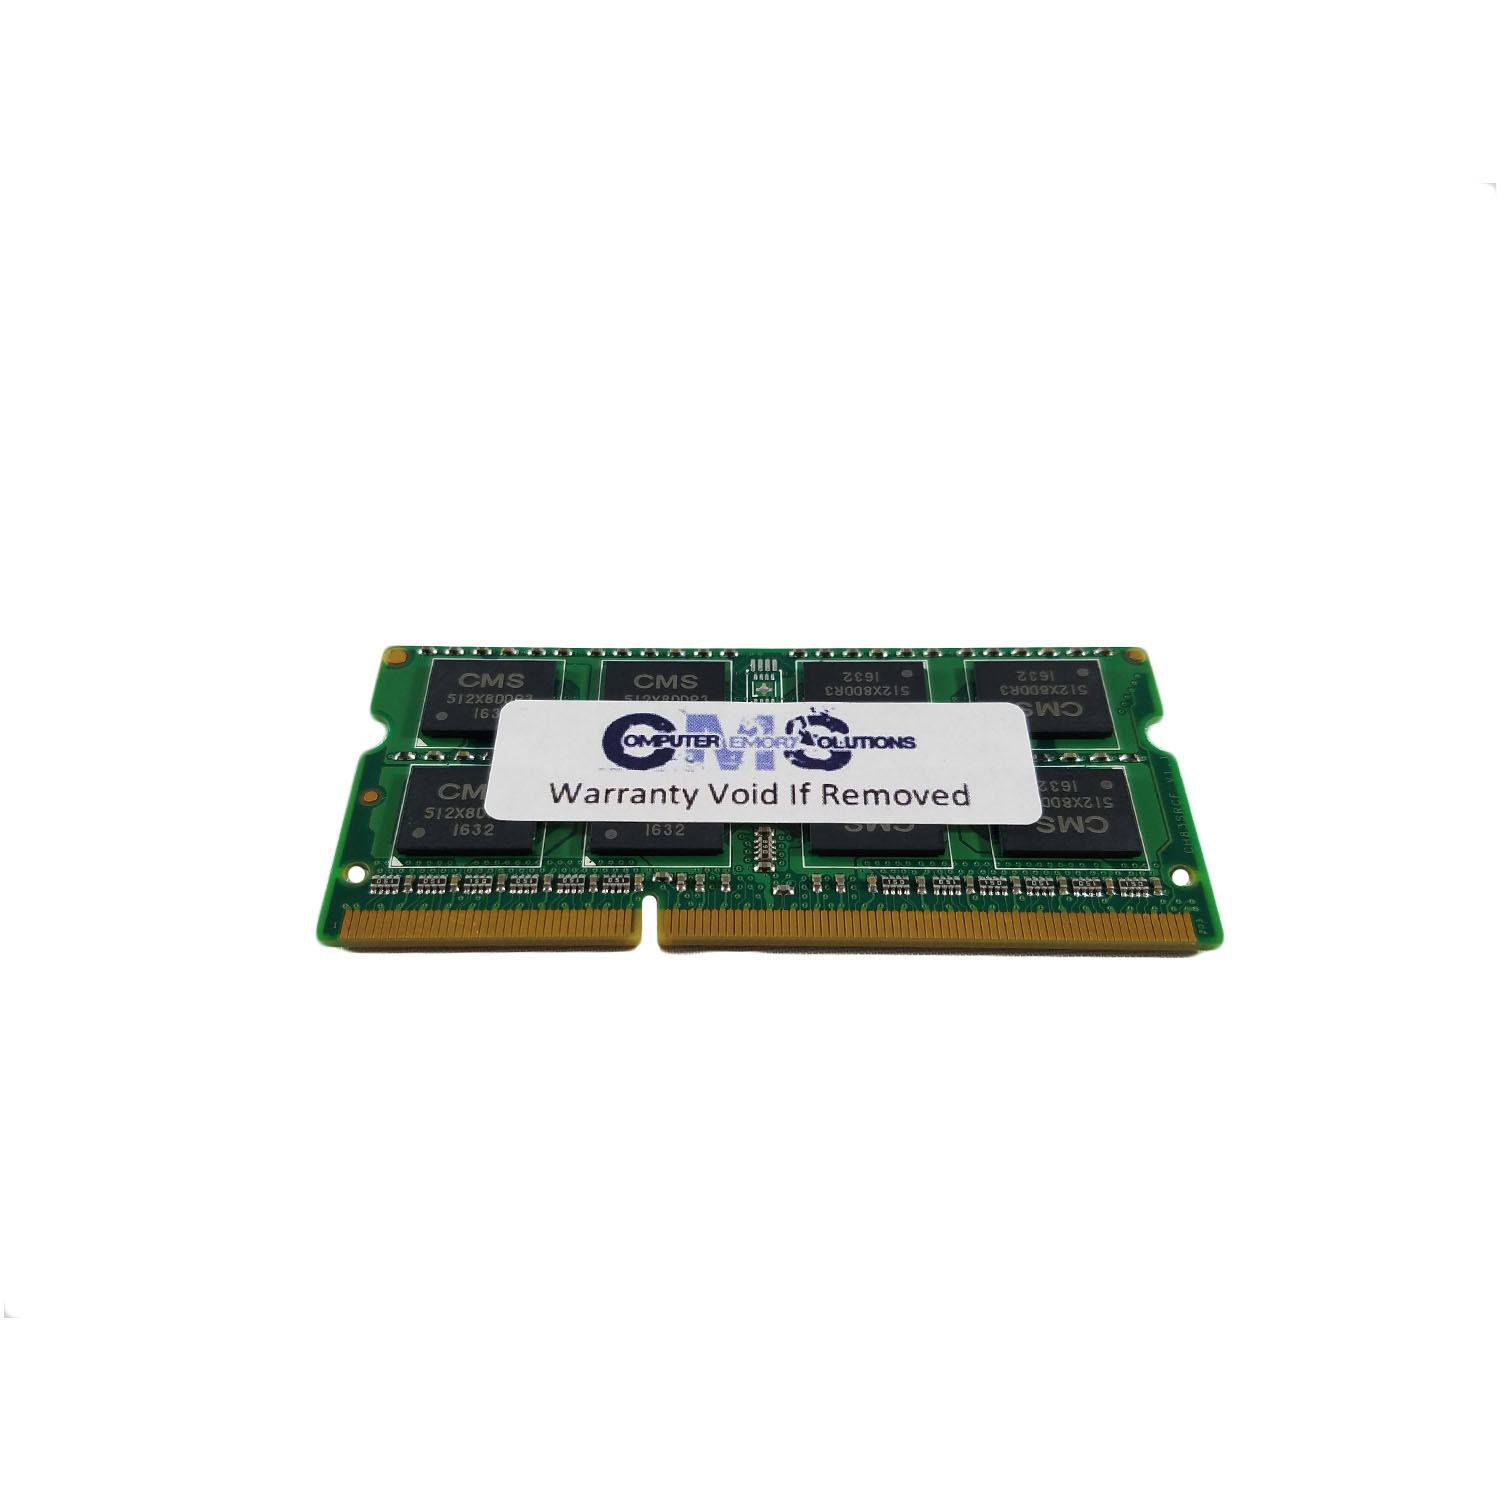 CMS 8GB (1X8GB) DDR3 12800 1600MHz NON ECC SODIMM Memory Ram Upgrade Compatible with Toshiba® Satellite U920T-01Y, U920T-00S, U845W-Sp4361Sm - A8 - image 2 of 3